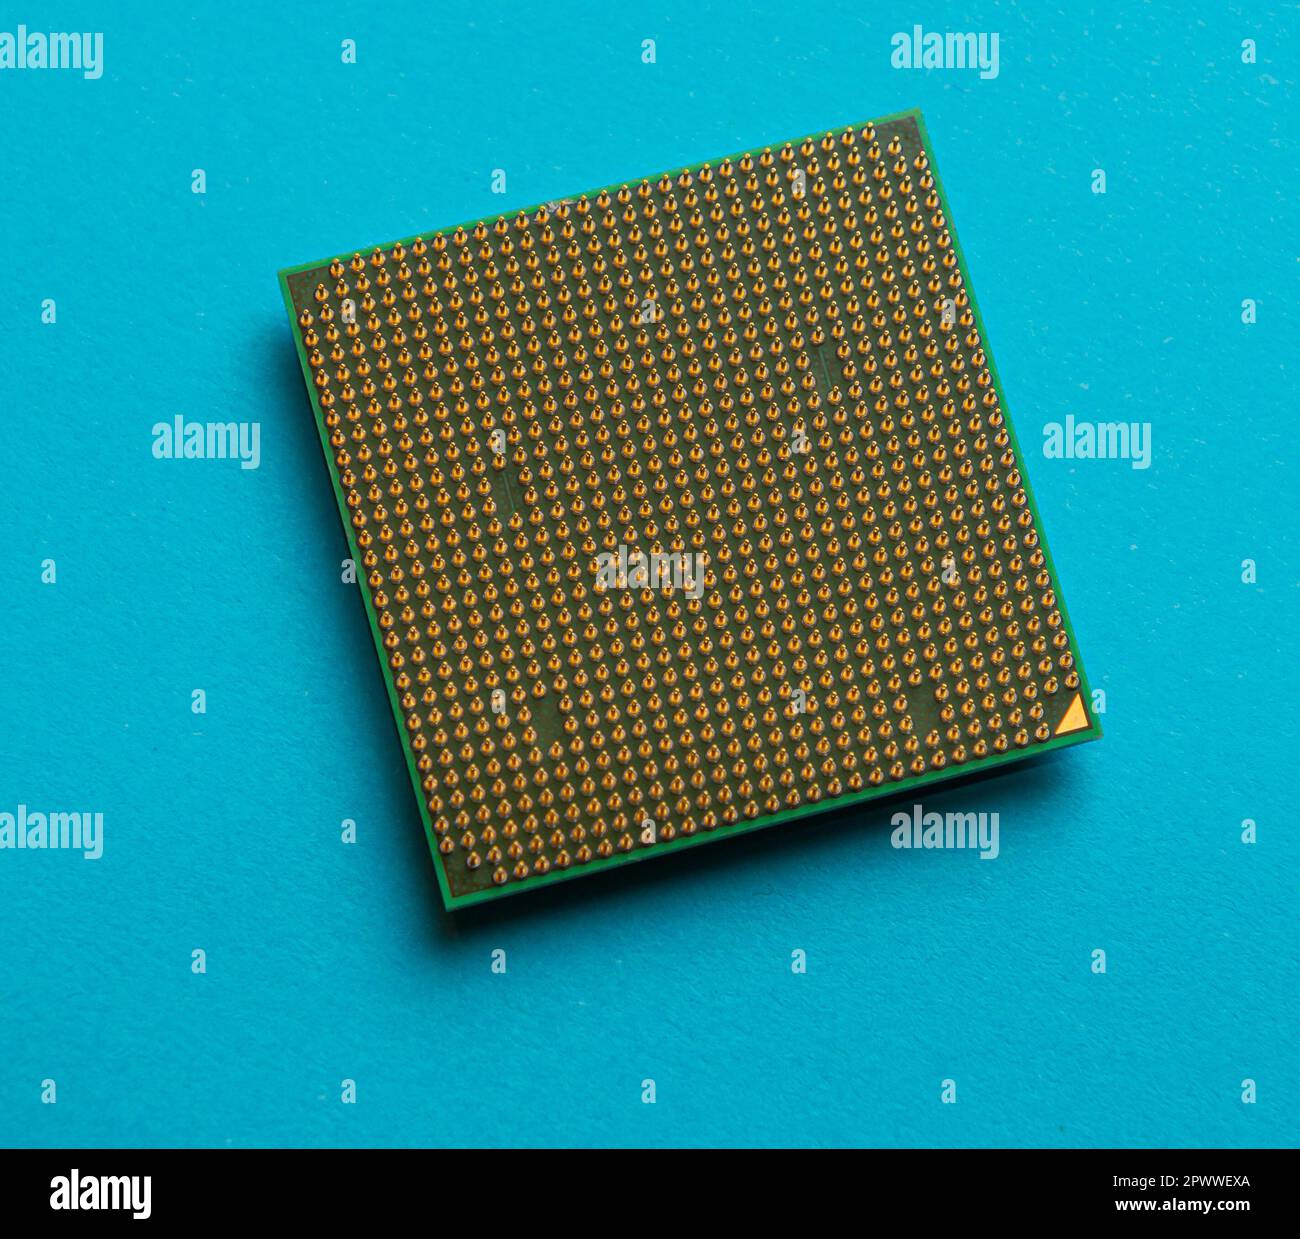 Gothenburg, Sweden - March 08 2014: Pins of an AMD Athlon 64 X2 CPU on blue background. Stock Photo